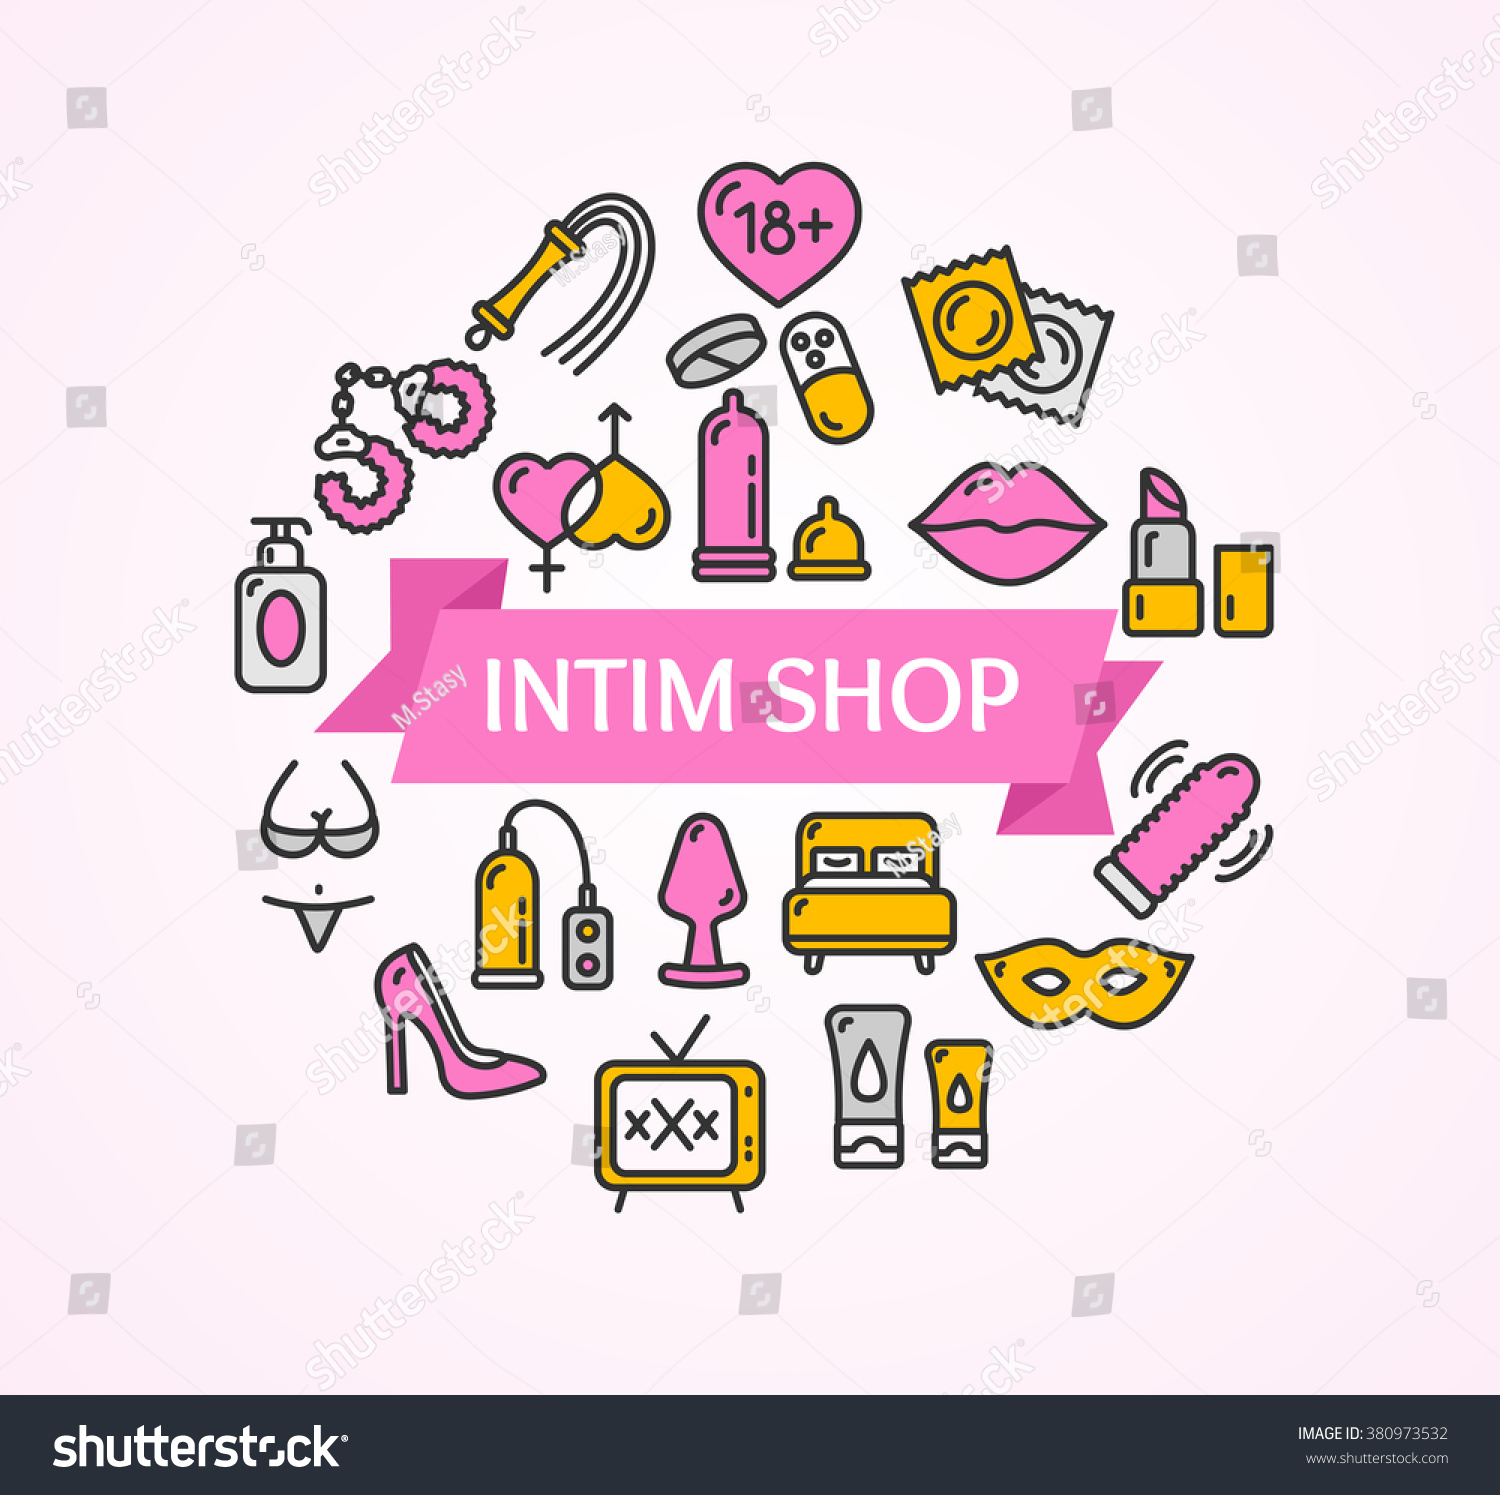 Intim Sex Shop Concept Vector Illustration Stock Vector Royalty Free 380973532 Shutterstock